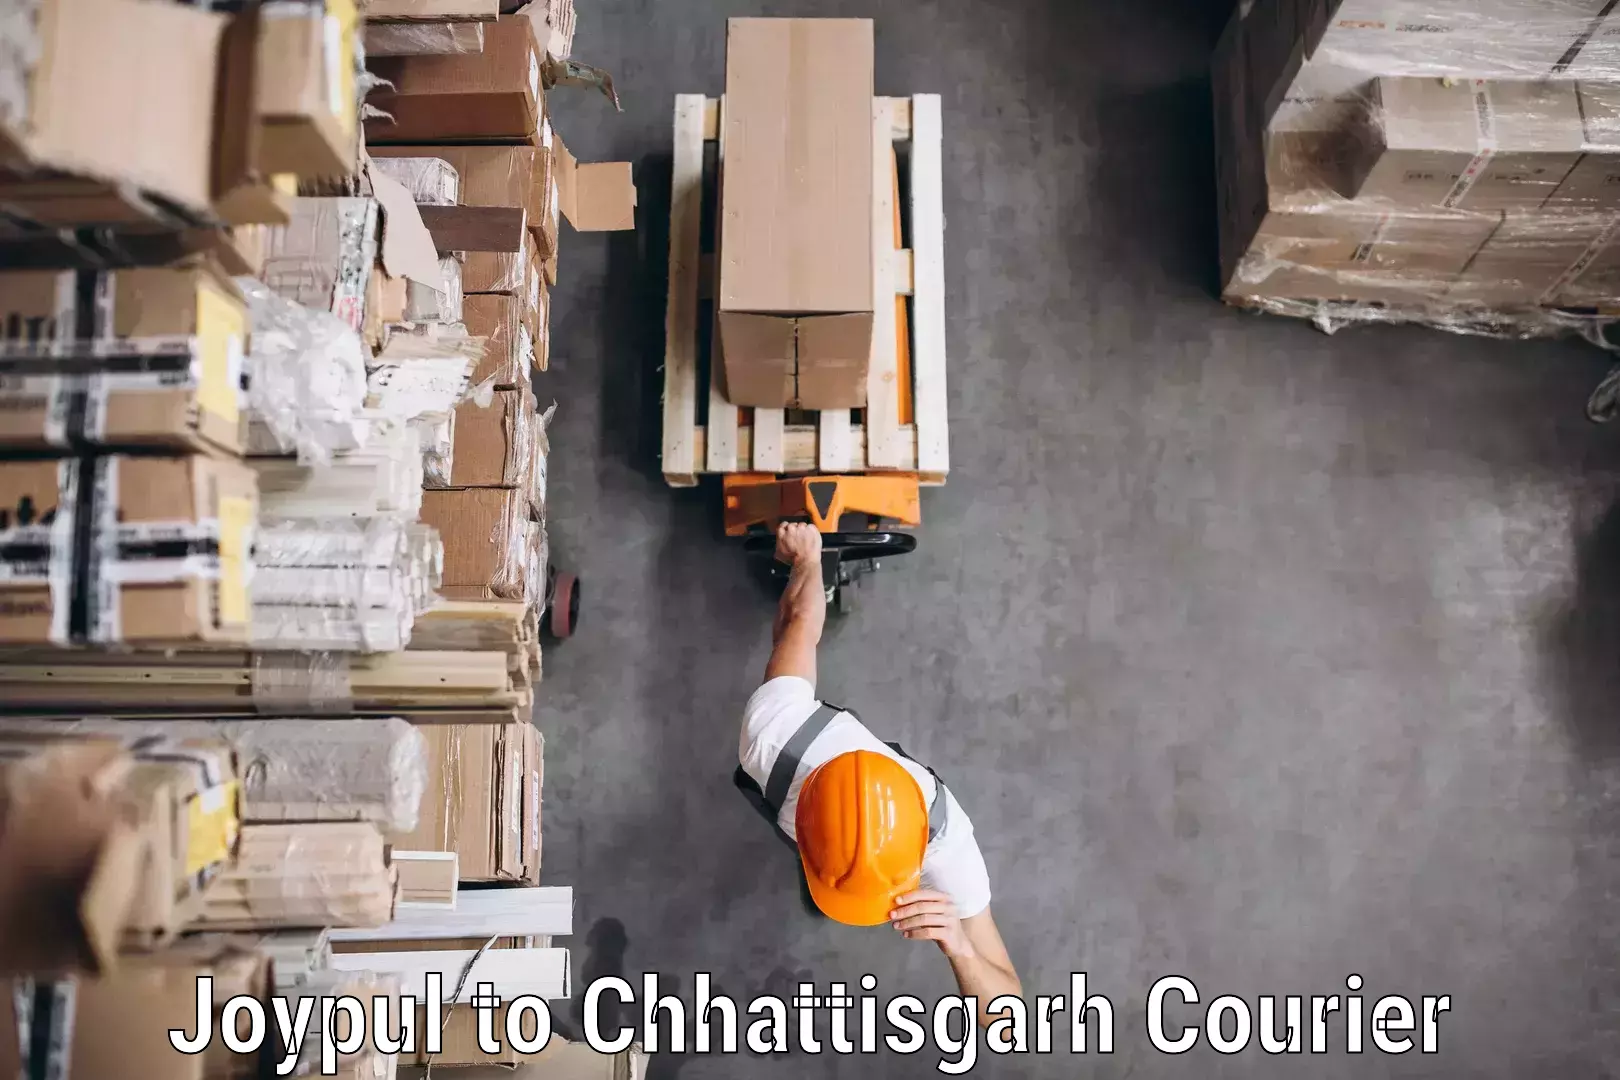 Efficient freight service Joypul to Chhattisgarh